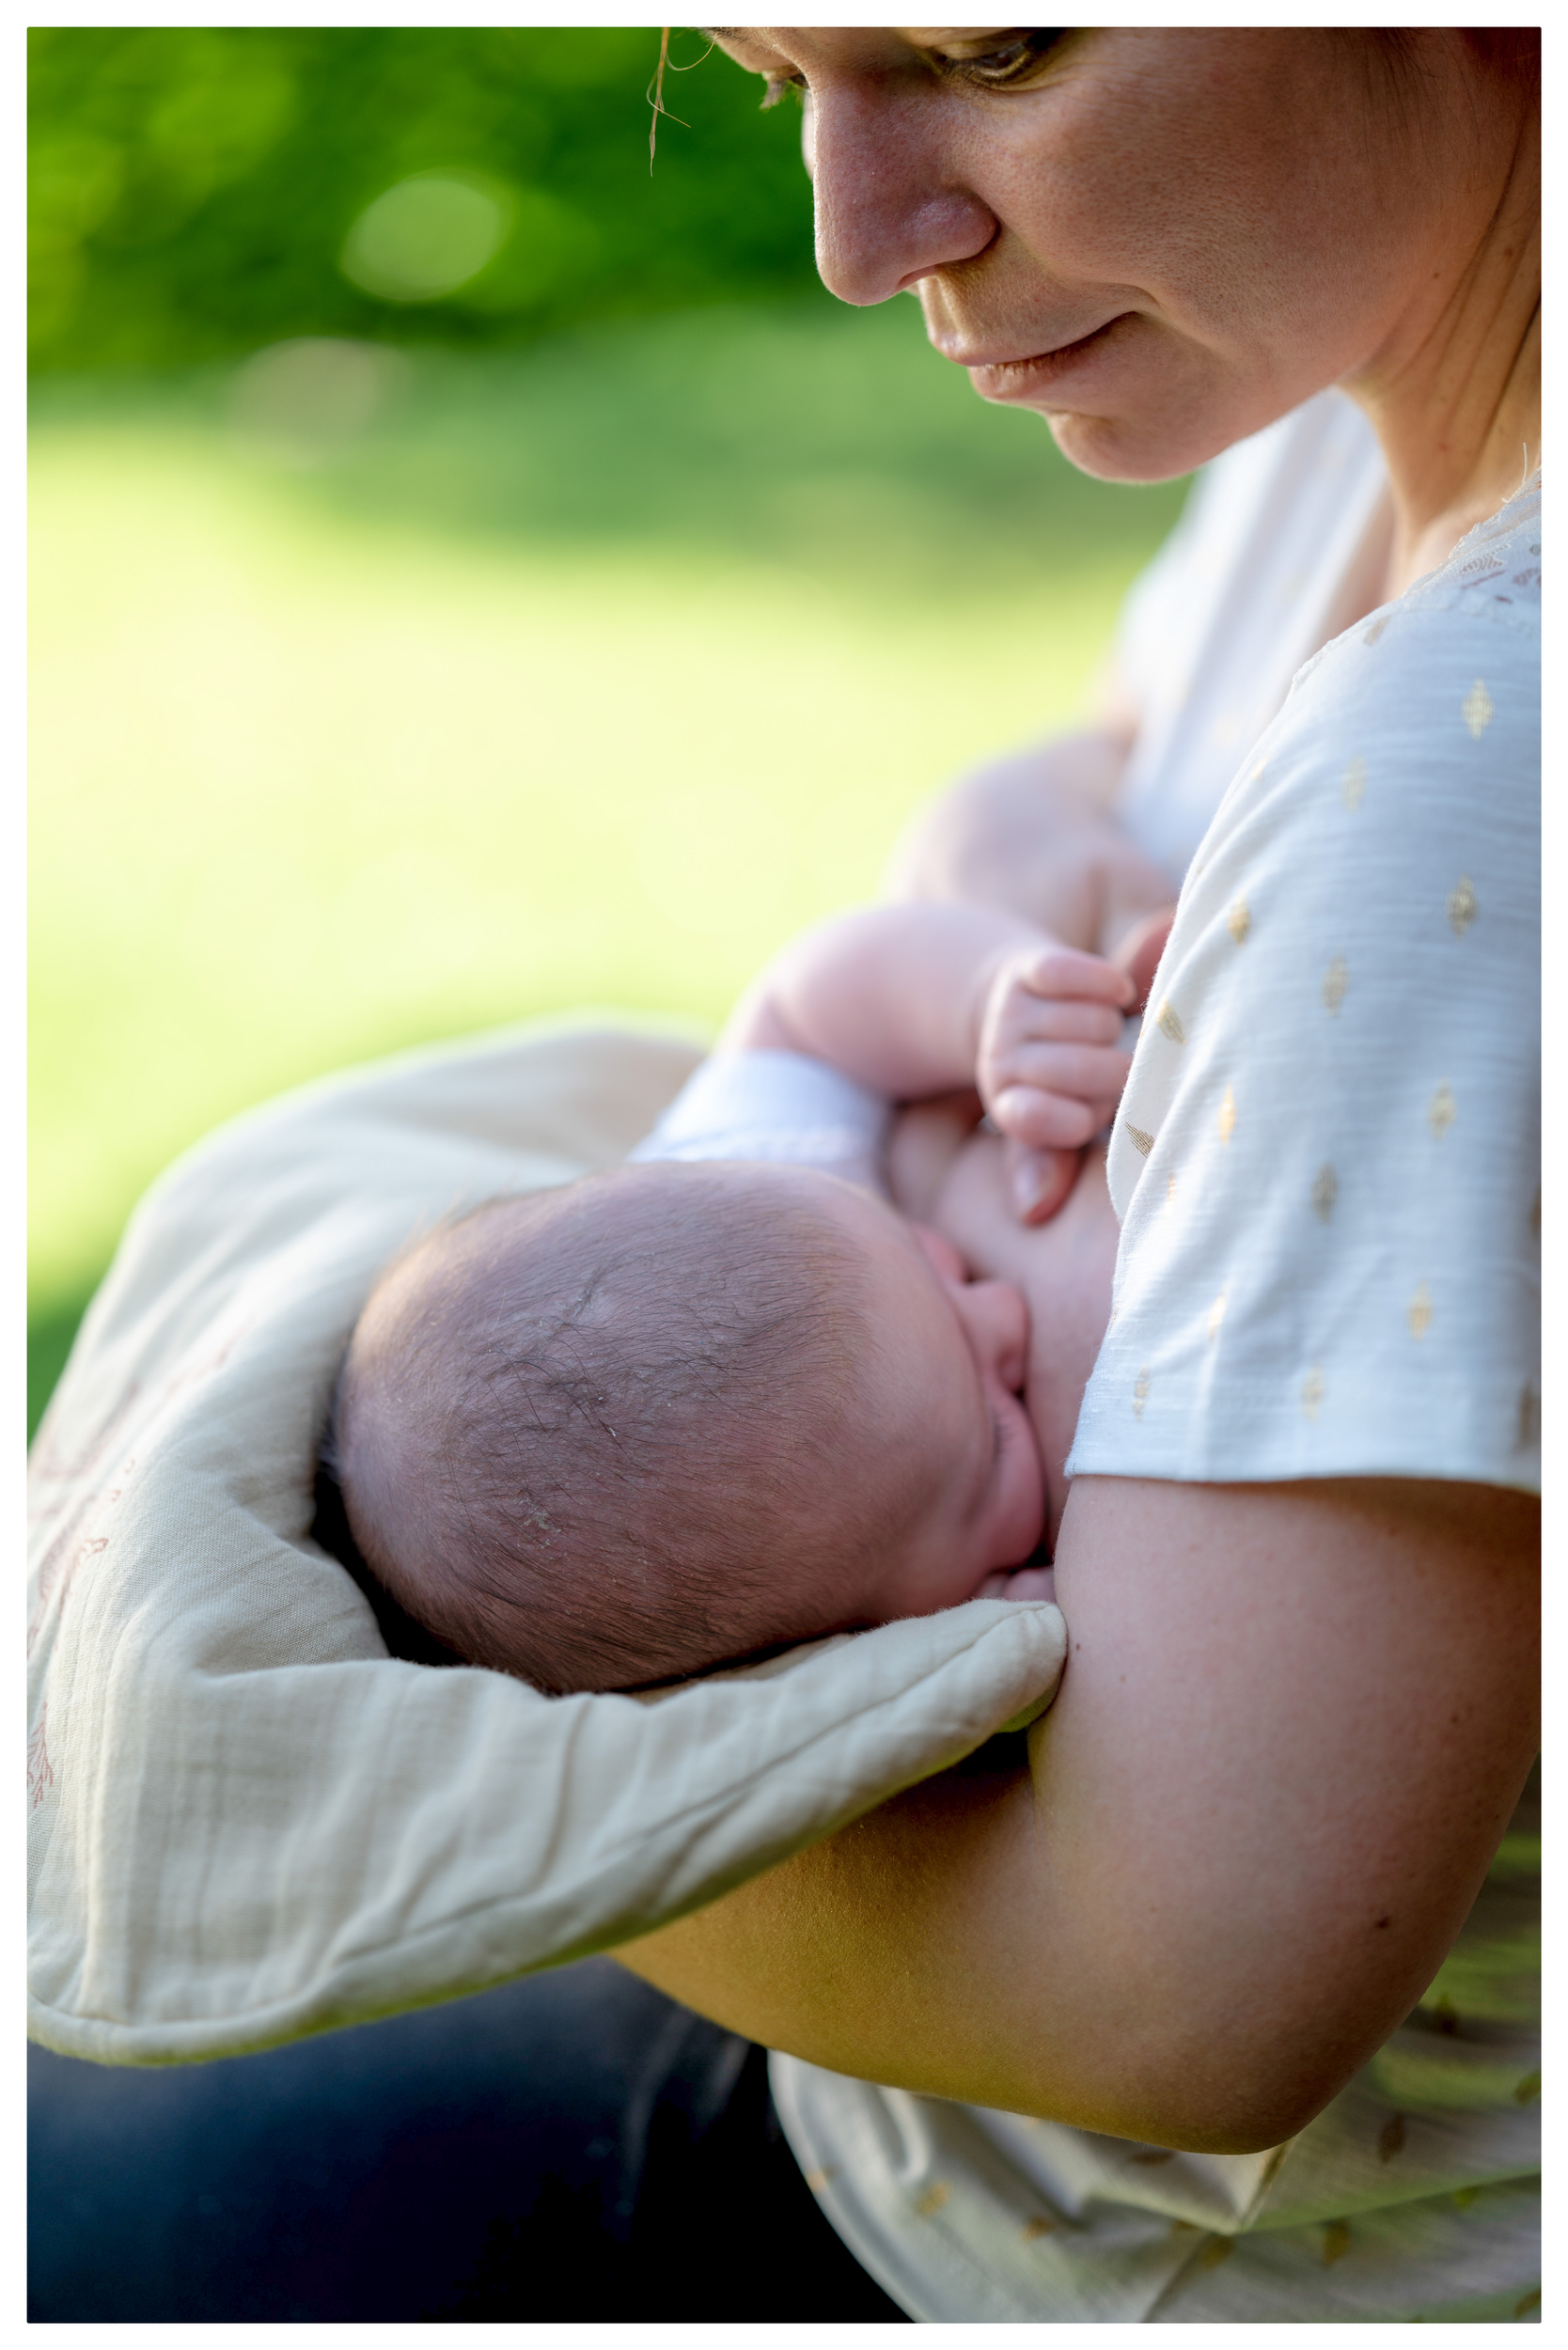 2. Topponcino - montessori - allaitement - bebe - peau a peau - coton bio - cadeau naissance personnalisable - cadeau de naissance unique - eveil bebe - parentalite